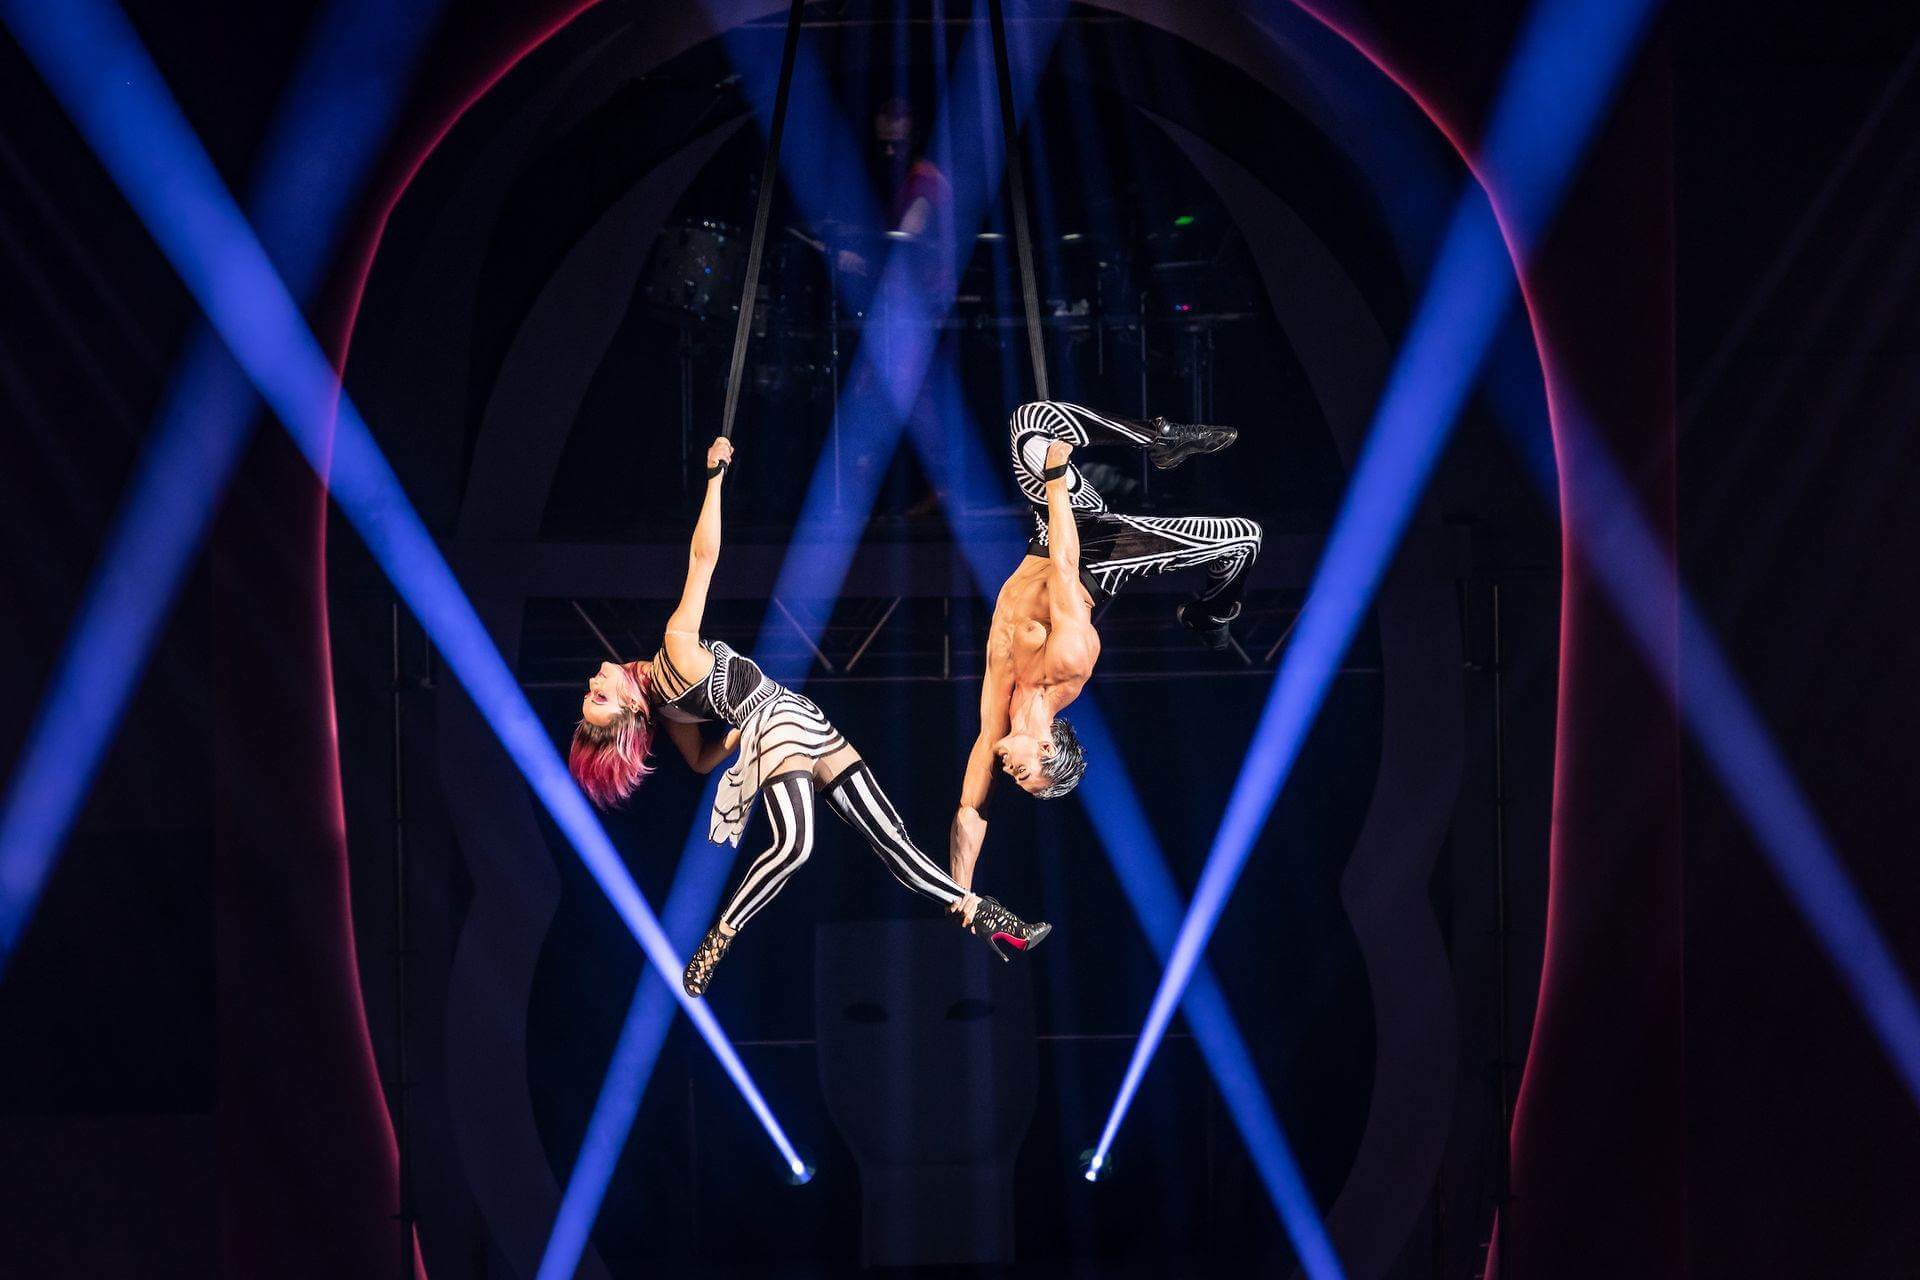 Diva by Cirque du Soleil 2018: Danza vertical en pareja